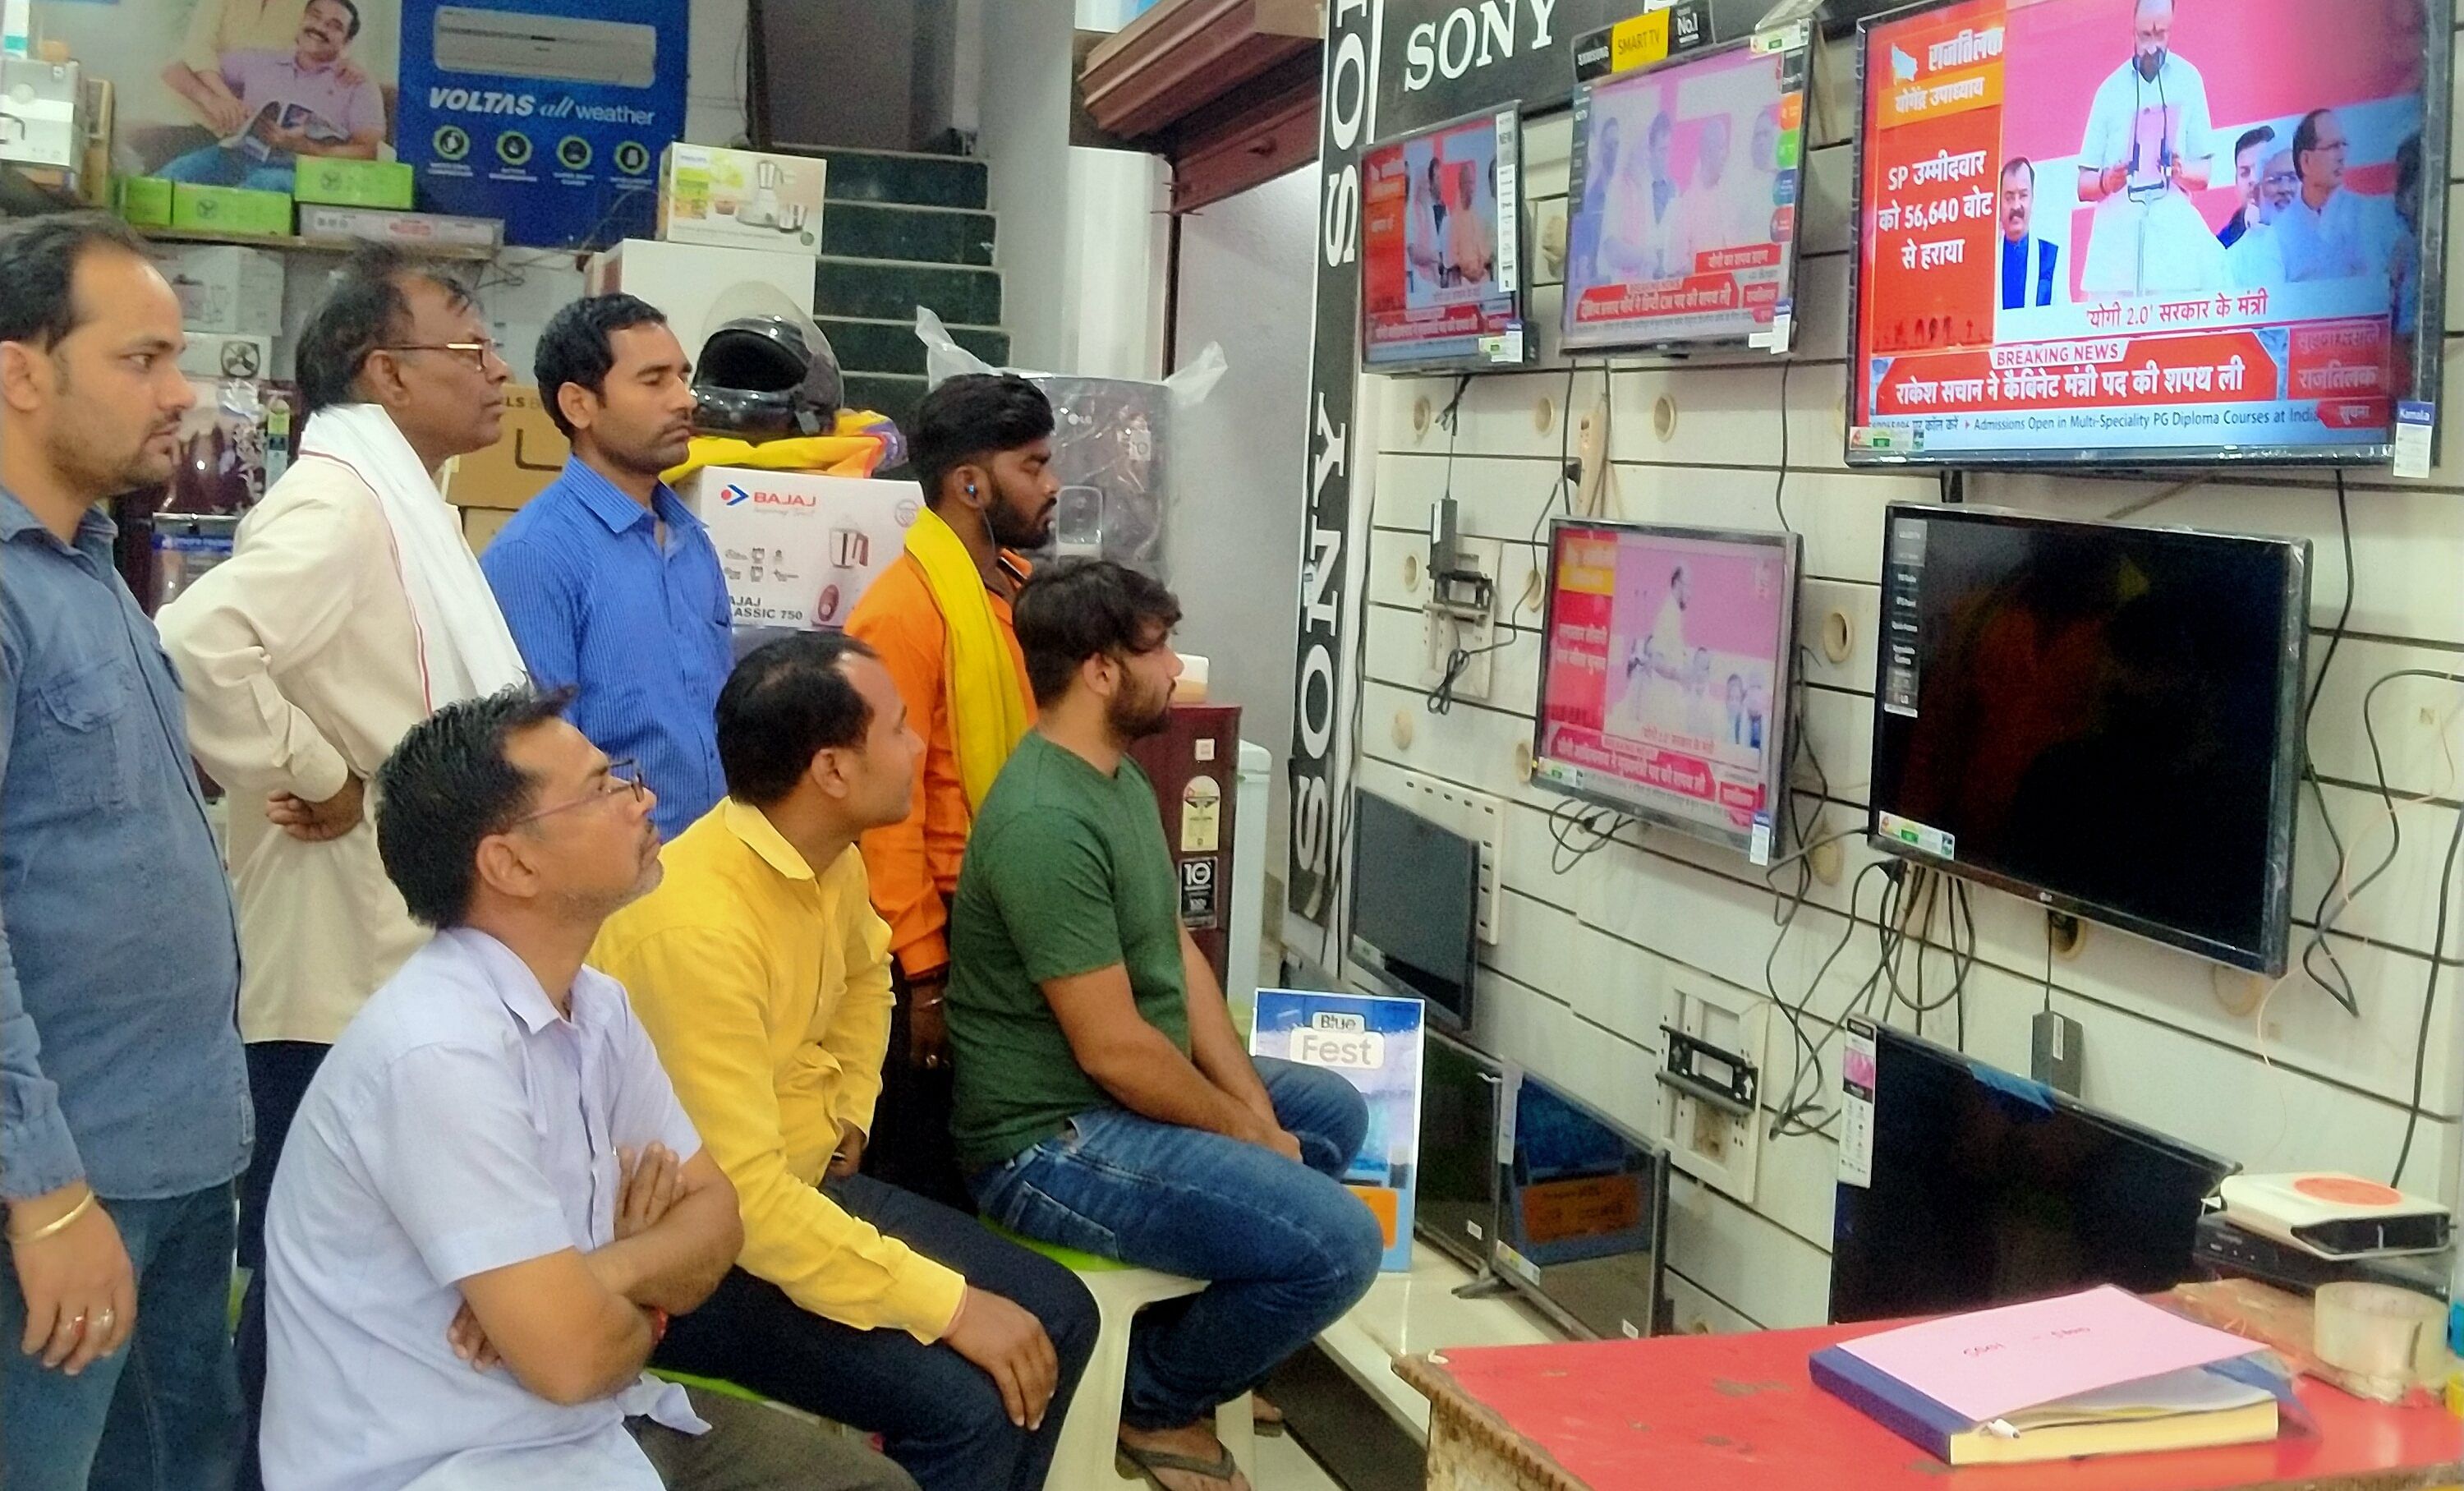 Les gens regardent la prestation de serment du ministre en chef Yogi Adityanath à la télévision à Robertsganj.